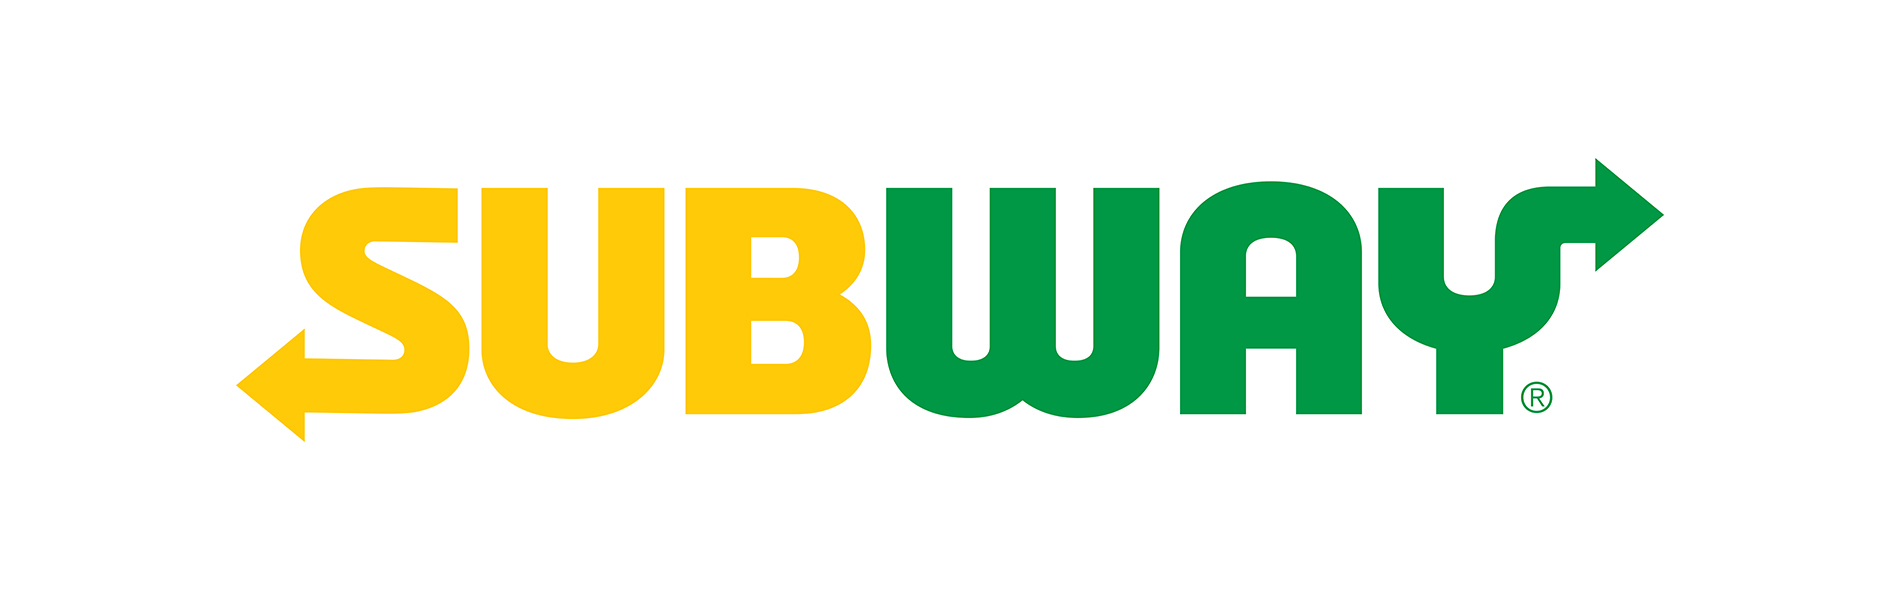 subway-restaurants-reveals-bold-new-logo-and-symbol-null-HR